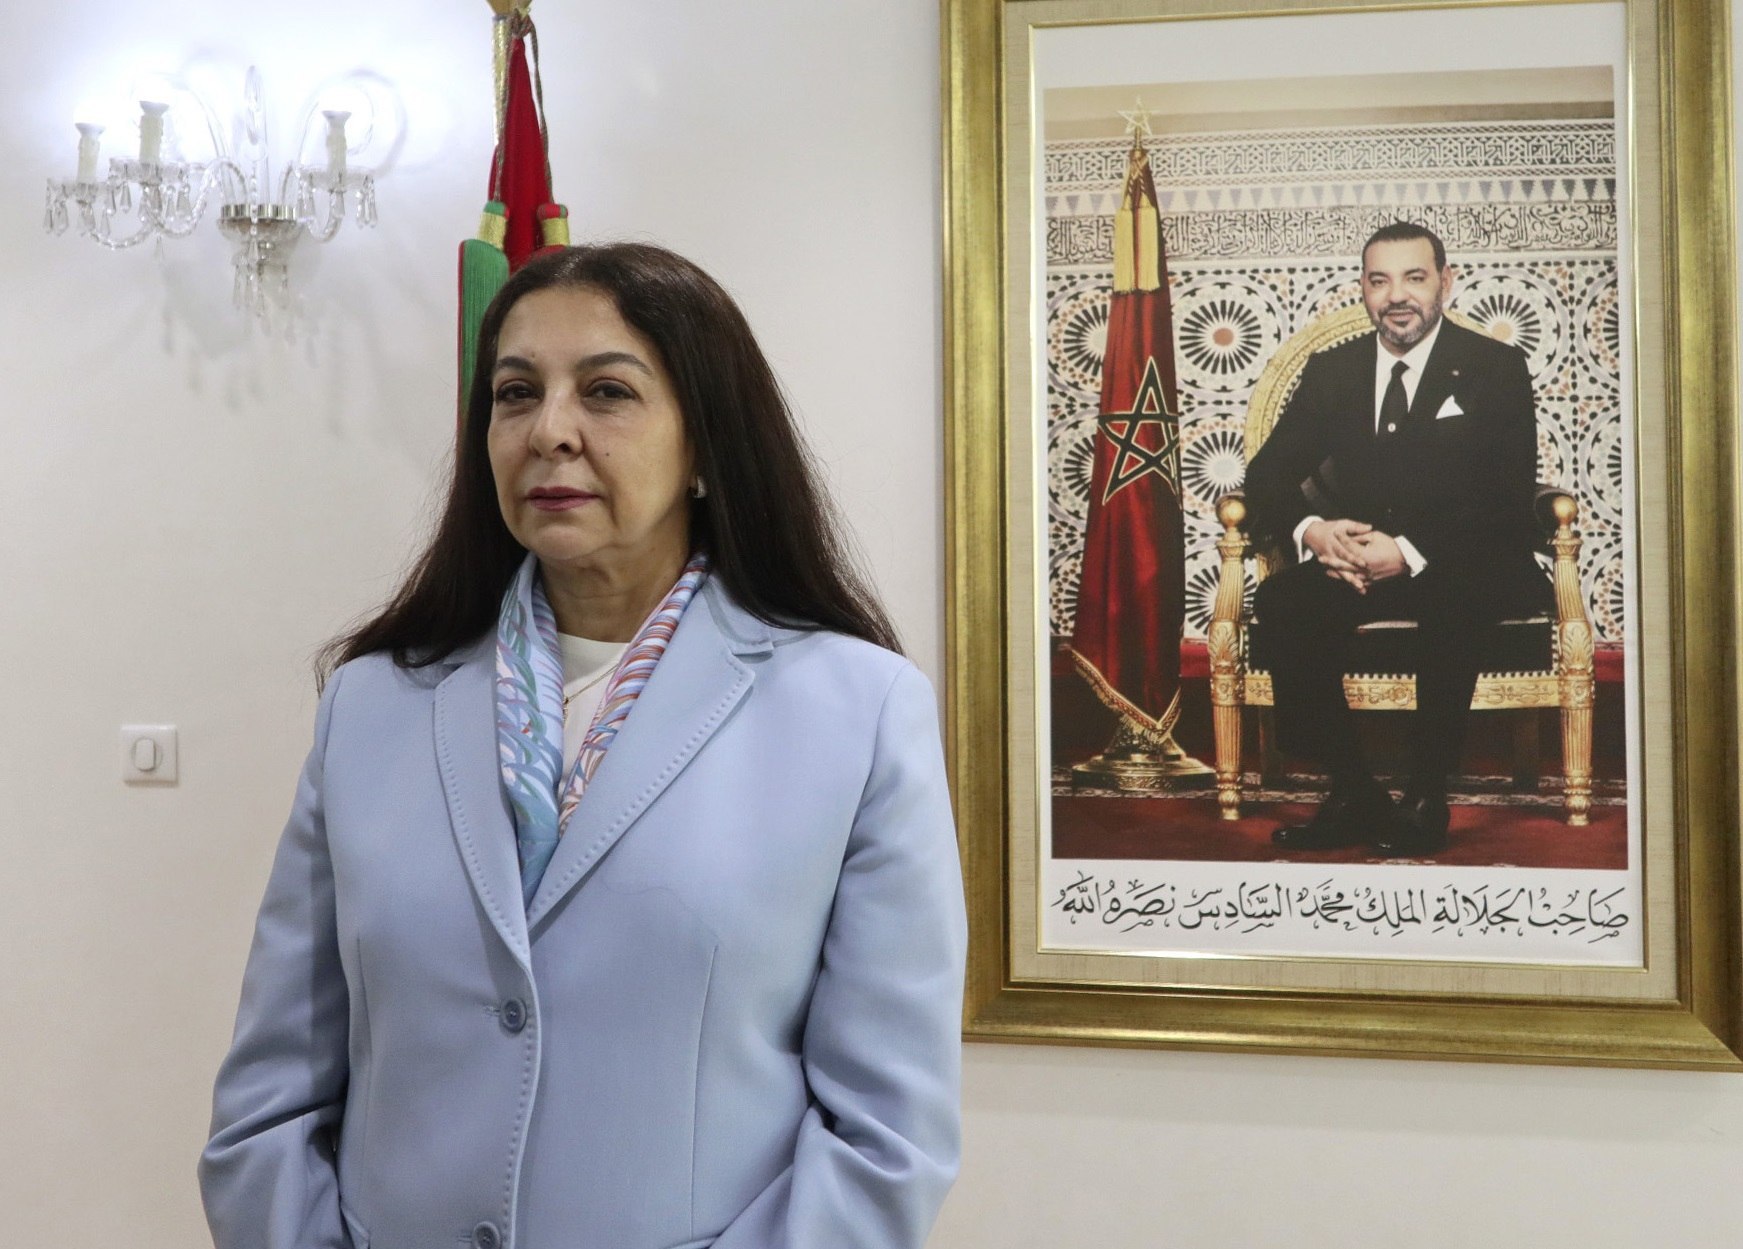 La embajadora de Marruecos en Espaa, Karima Benyaich.